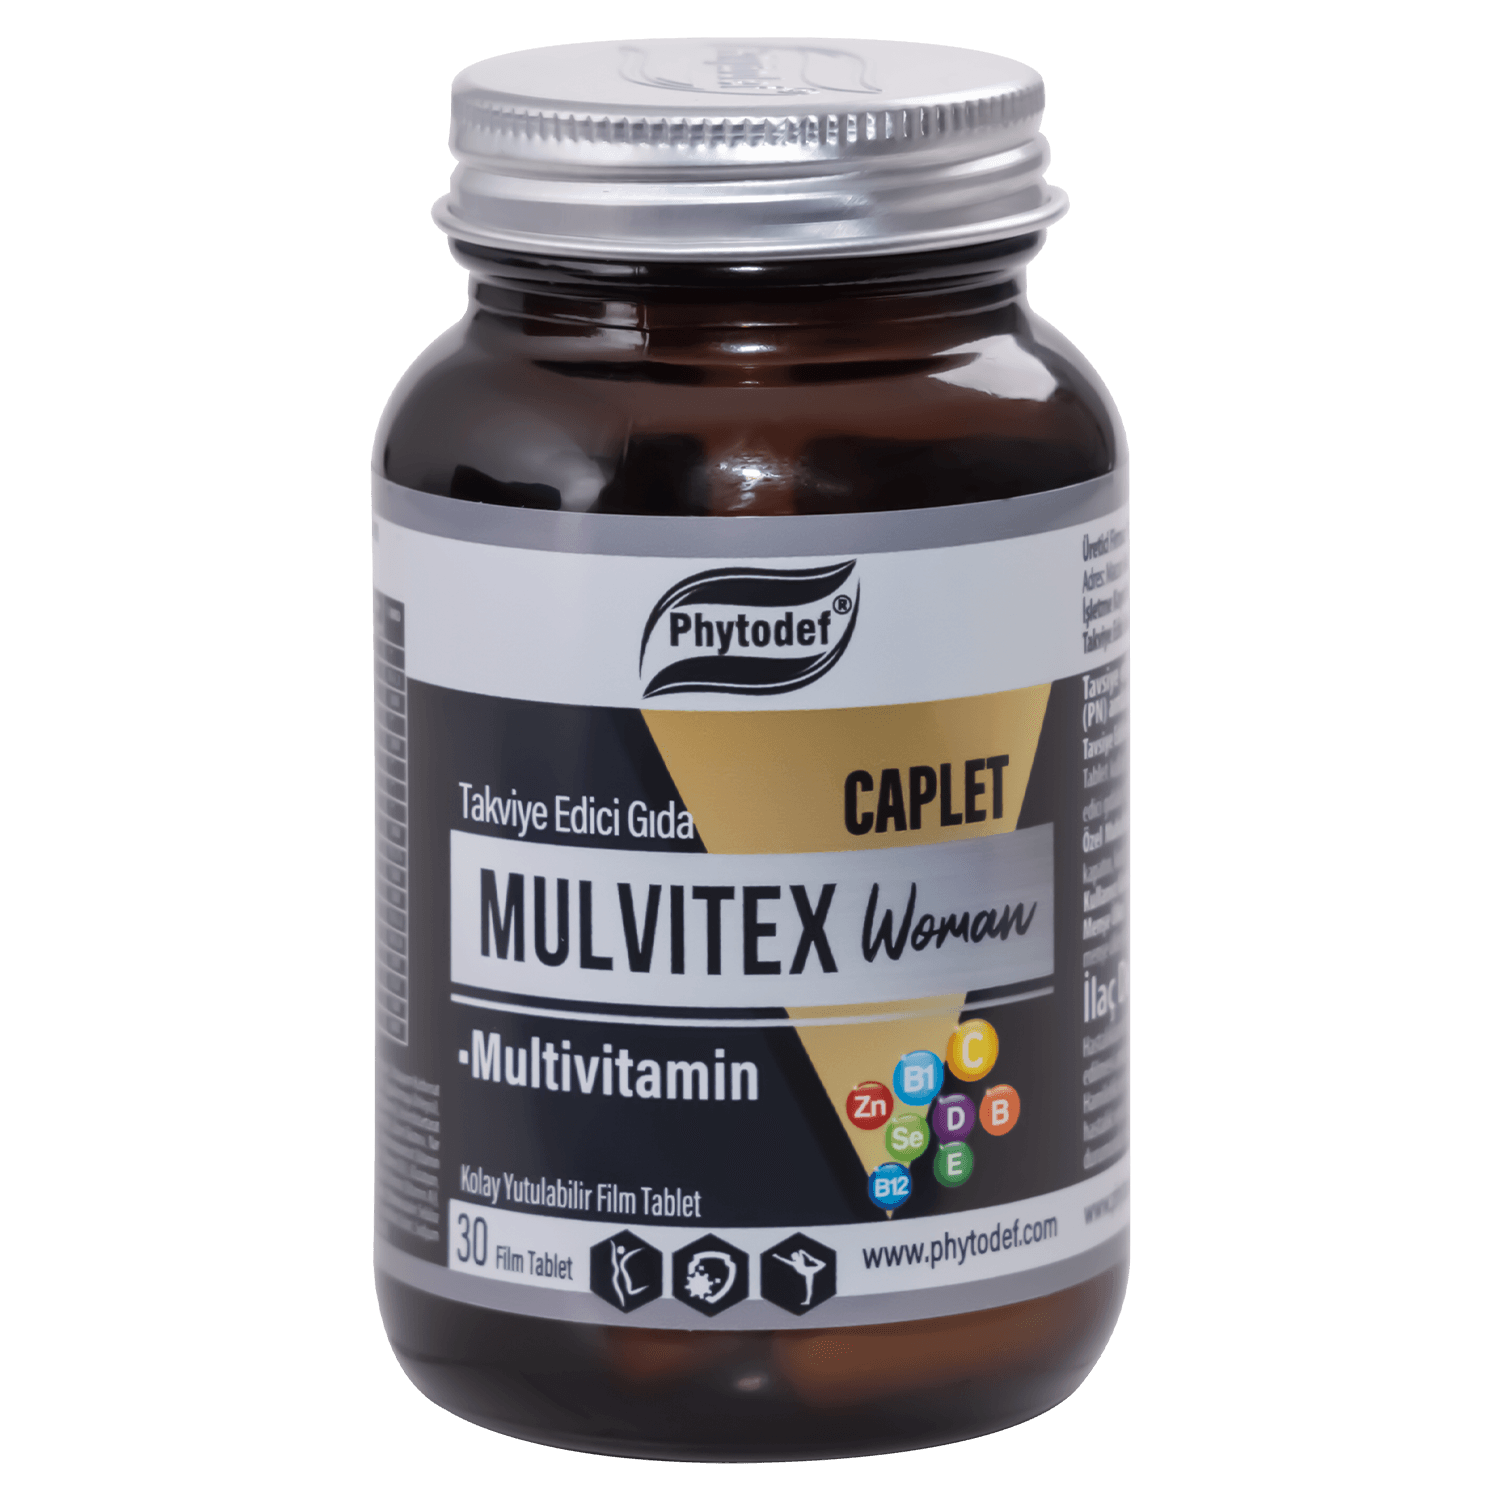 Mulvitex Multivitamin Woman